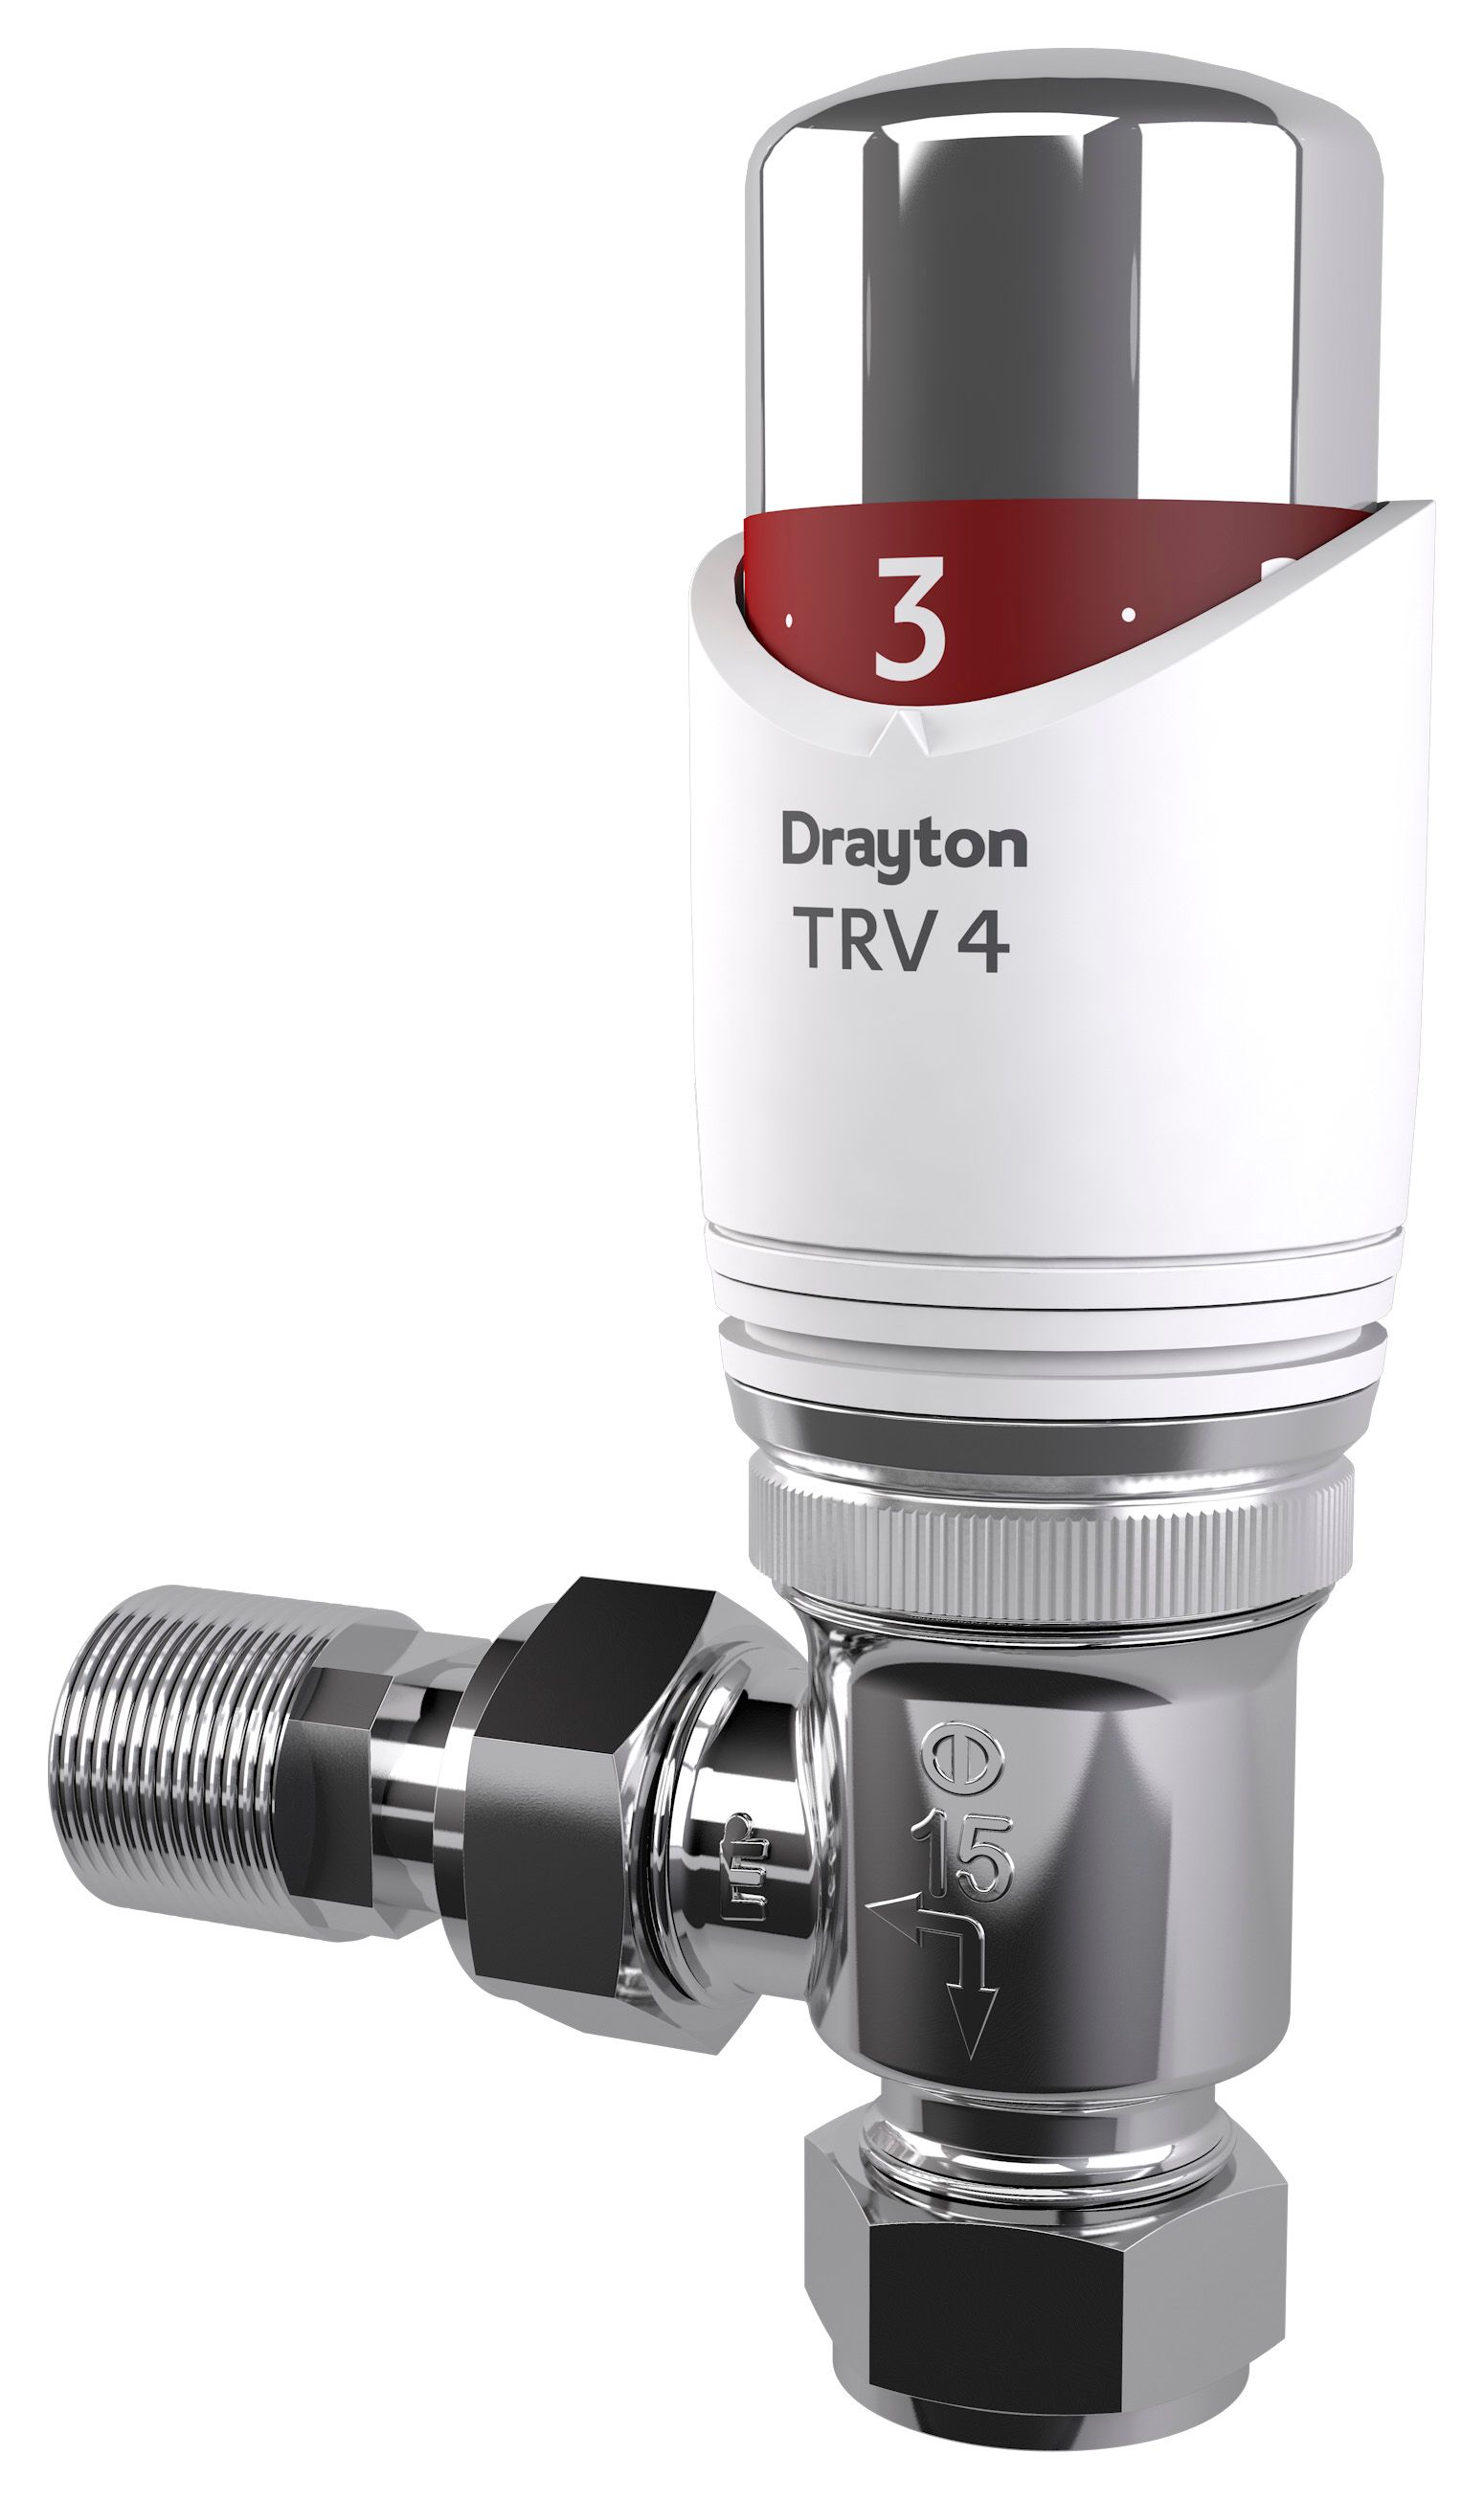 Drayton TRV4 Classic 15mm Angled Thermostatic Radiator Valve 07 05 150WK - White & Chrome